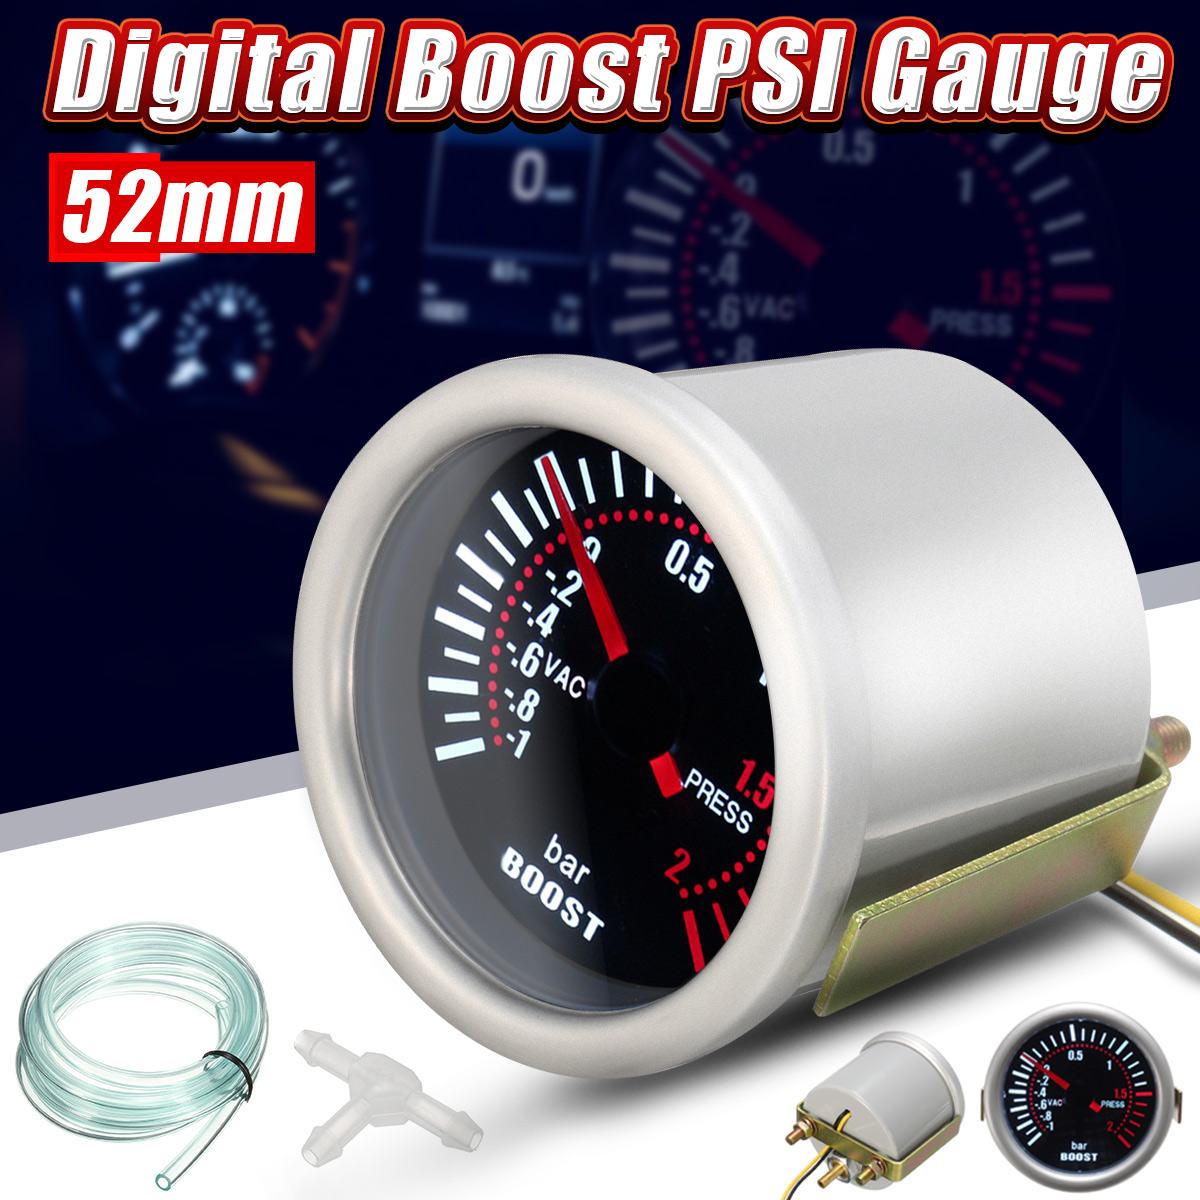 12V 2" 52mm Turbo Boost Pressure Gauge PSI/BAR Car Digital LED Display Smoke Len Universal Auto Boost Pointer Meter